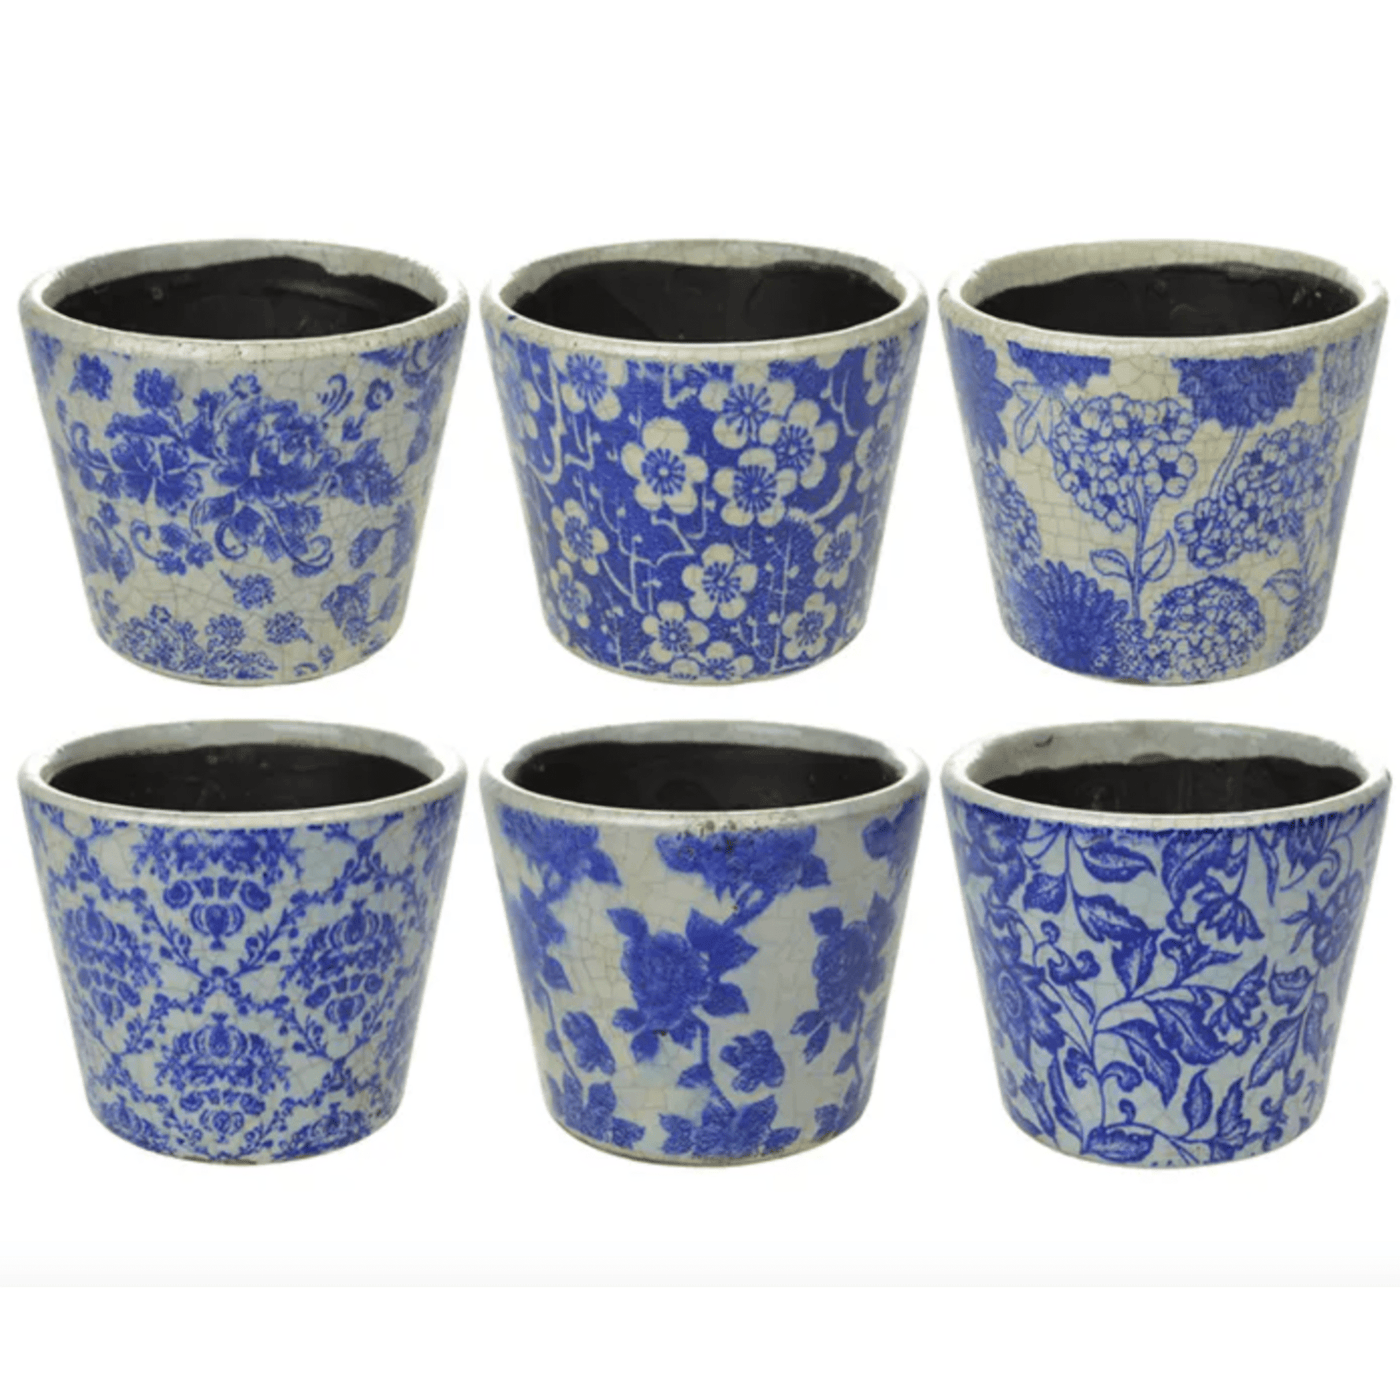 Vintage Blue and White Ceramic Planter Pots